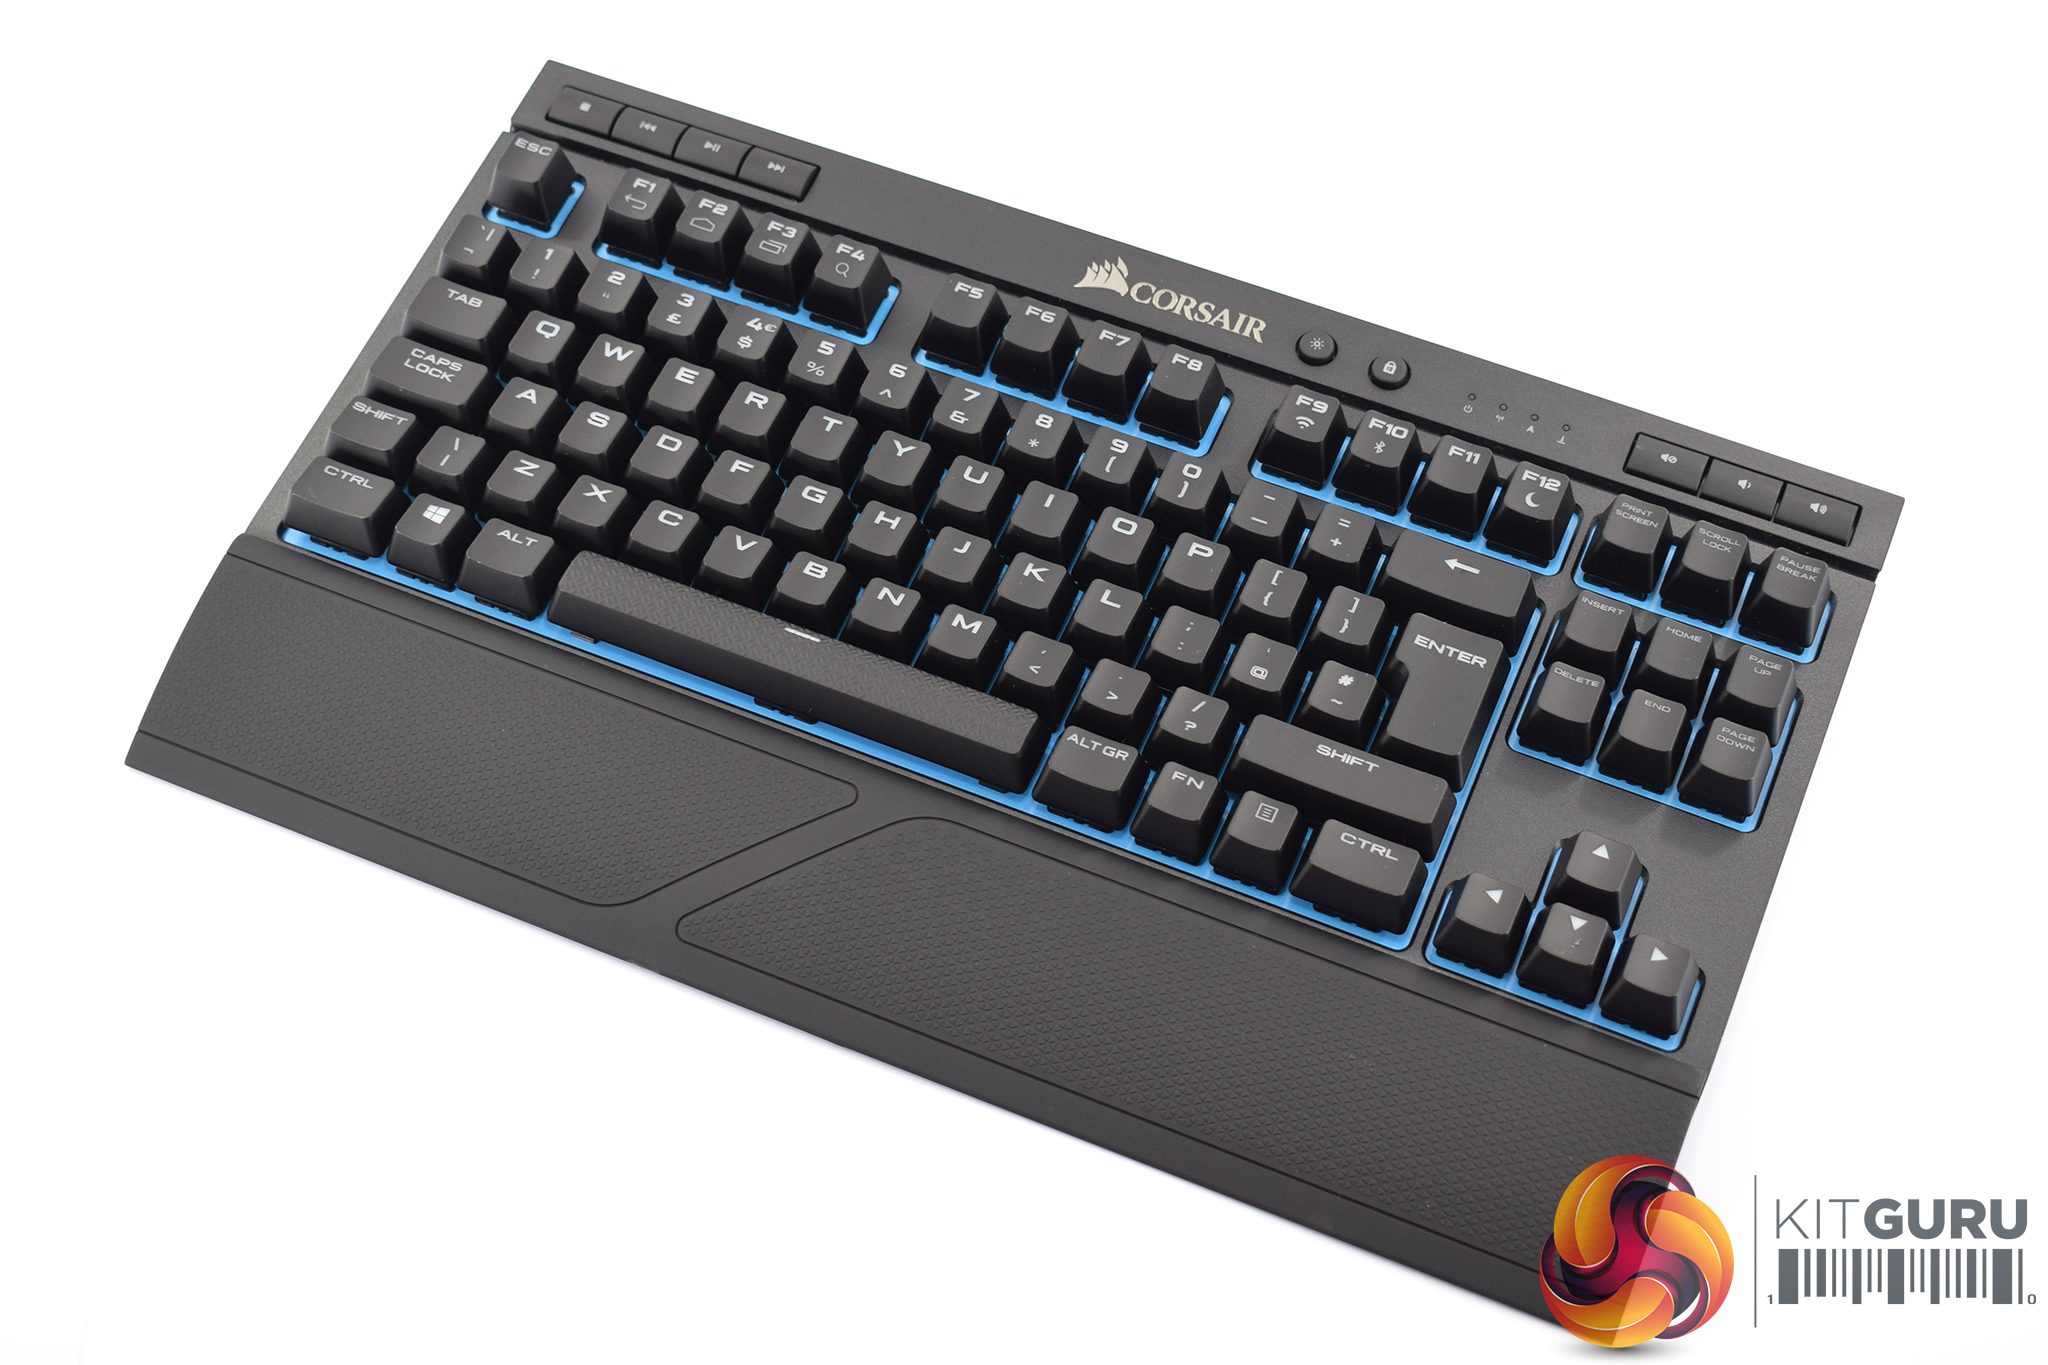 Corsair Mechanical Keyboard Review | KitGuru